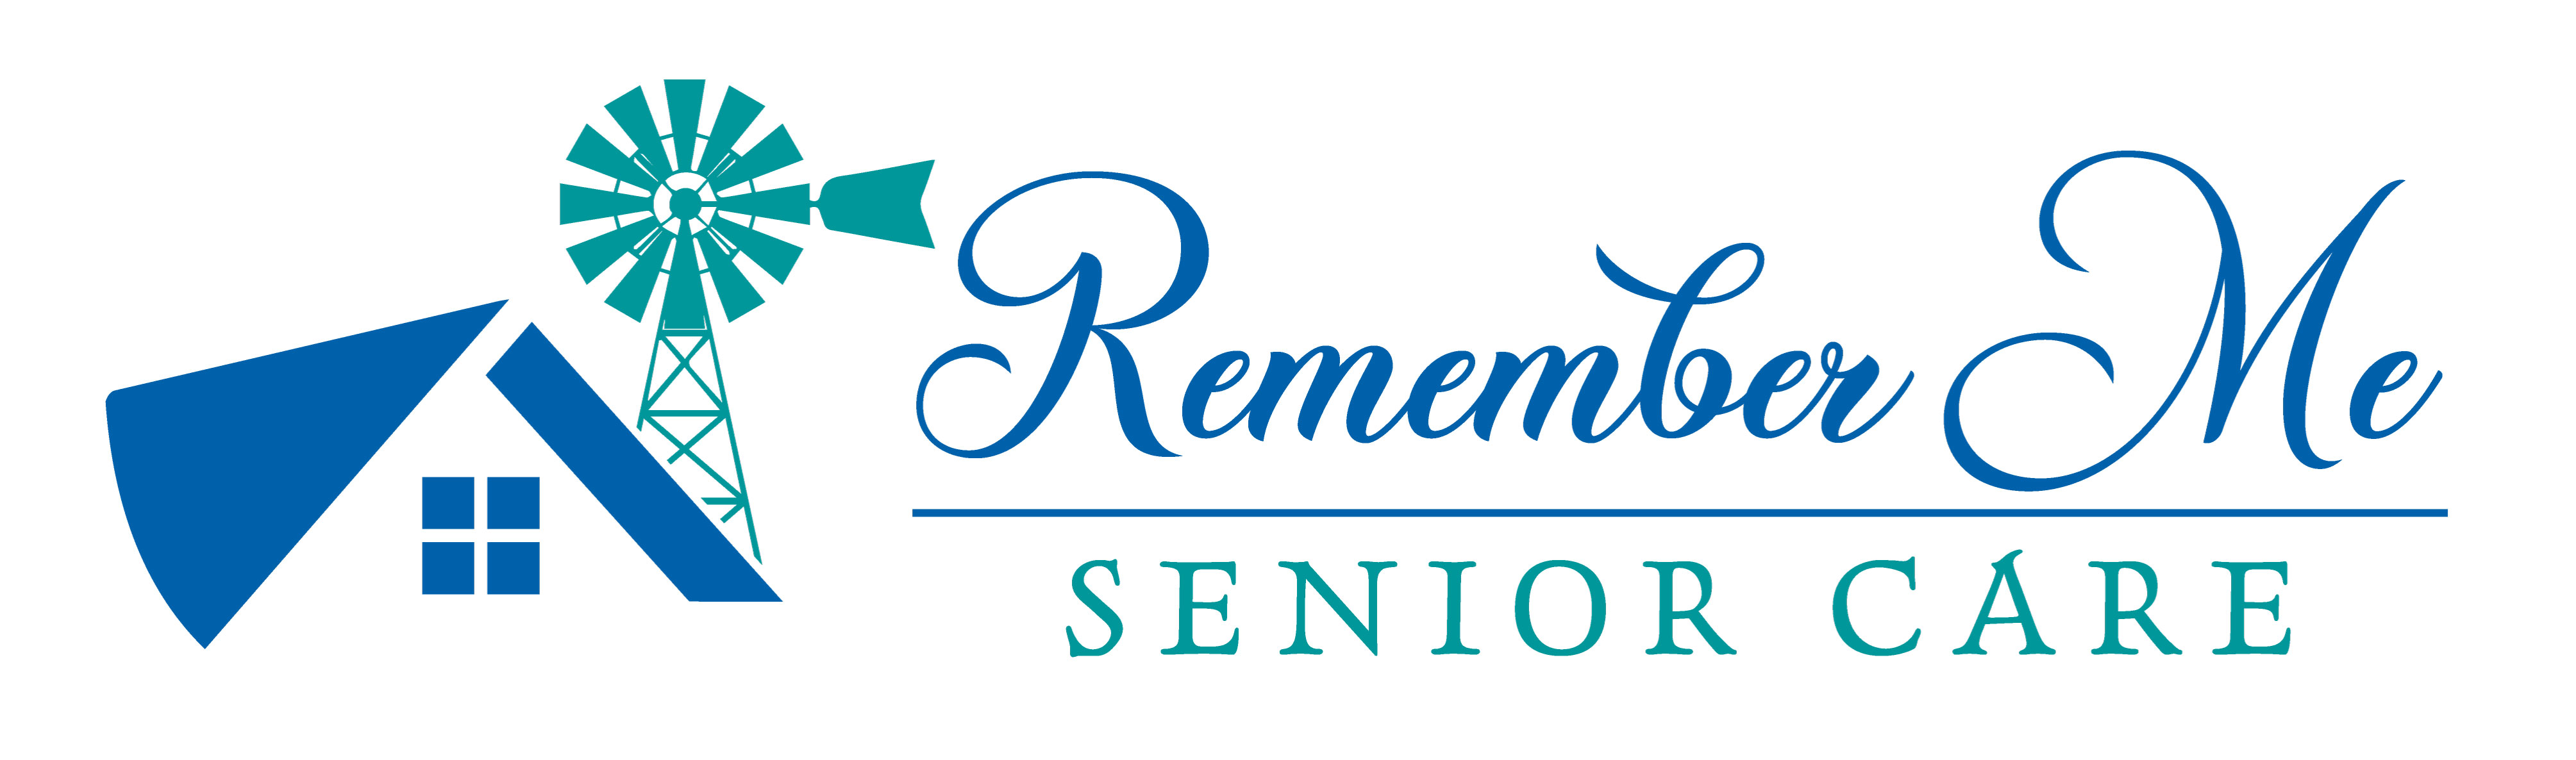 Remember Me Senior Care